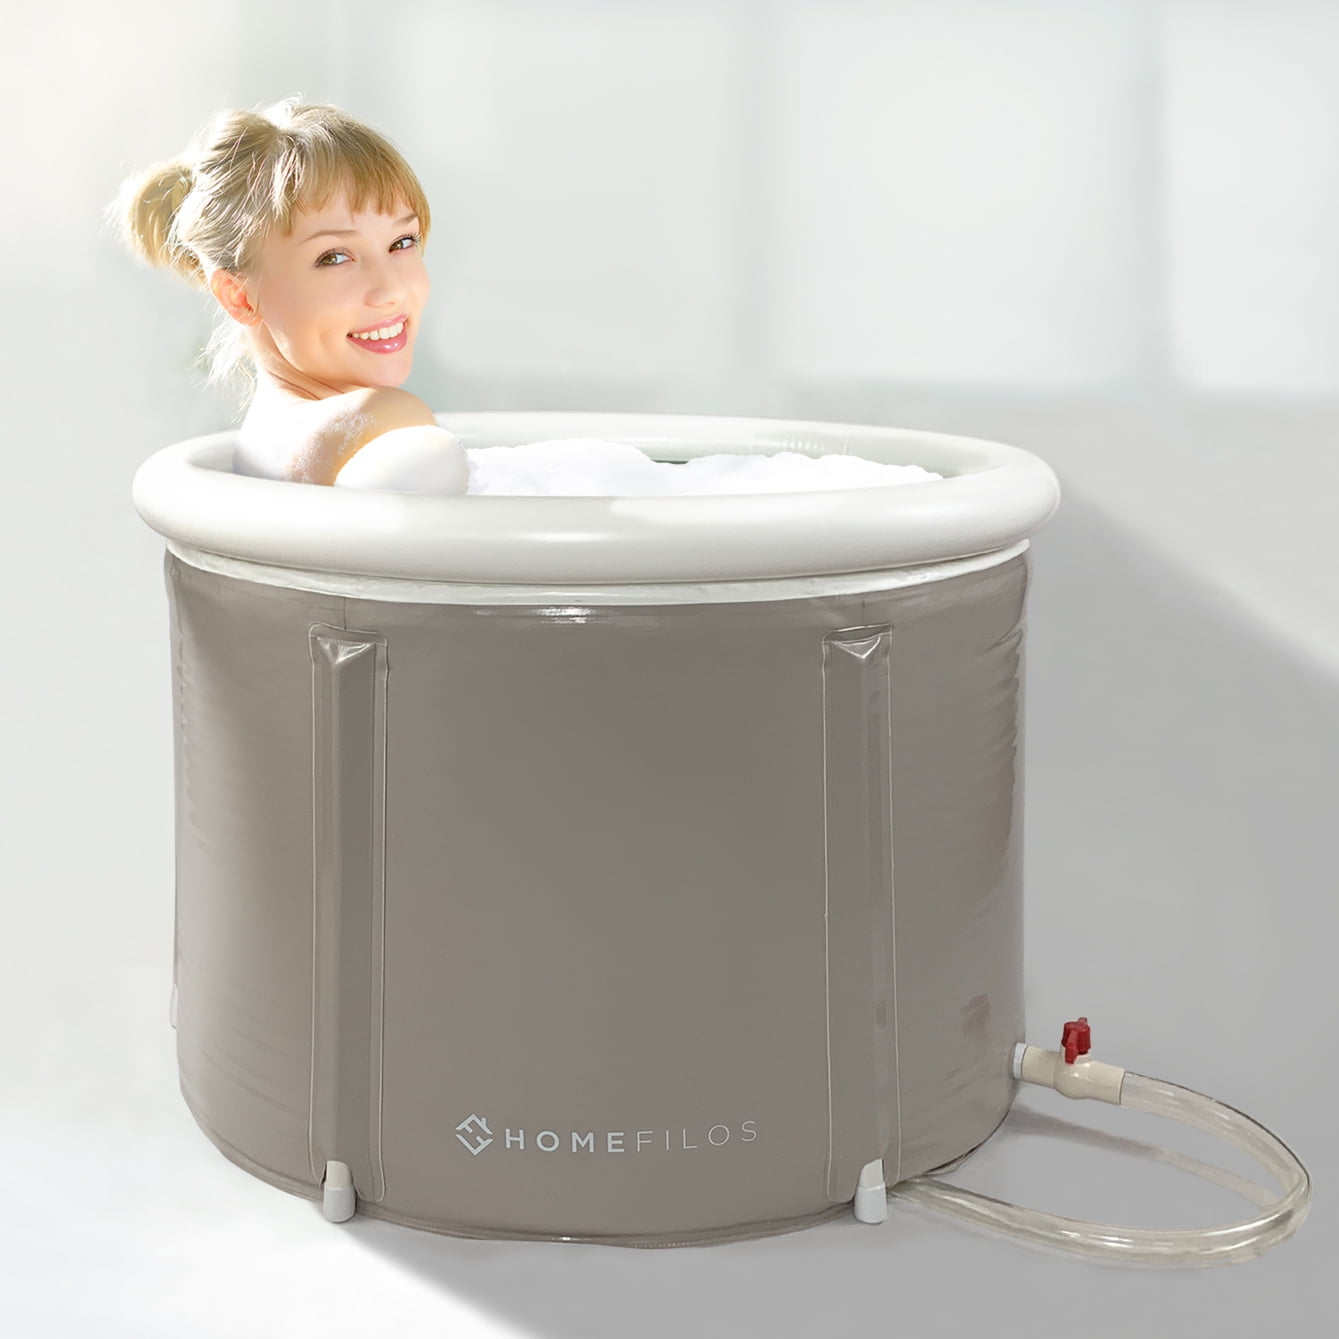 Homefilos Portable Bathtub Small Japanese Soaking Bath Tub For Shower Stall Inflatable